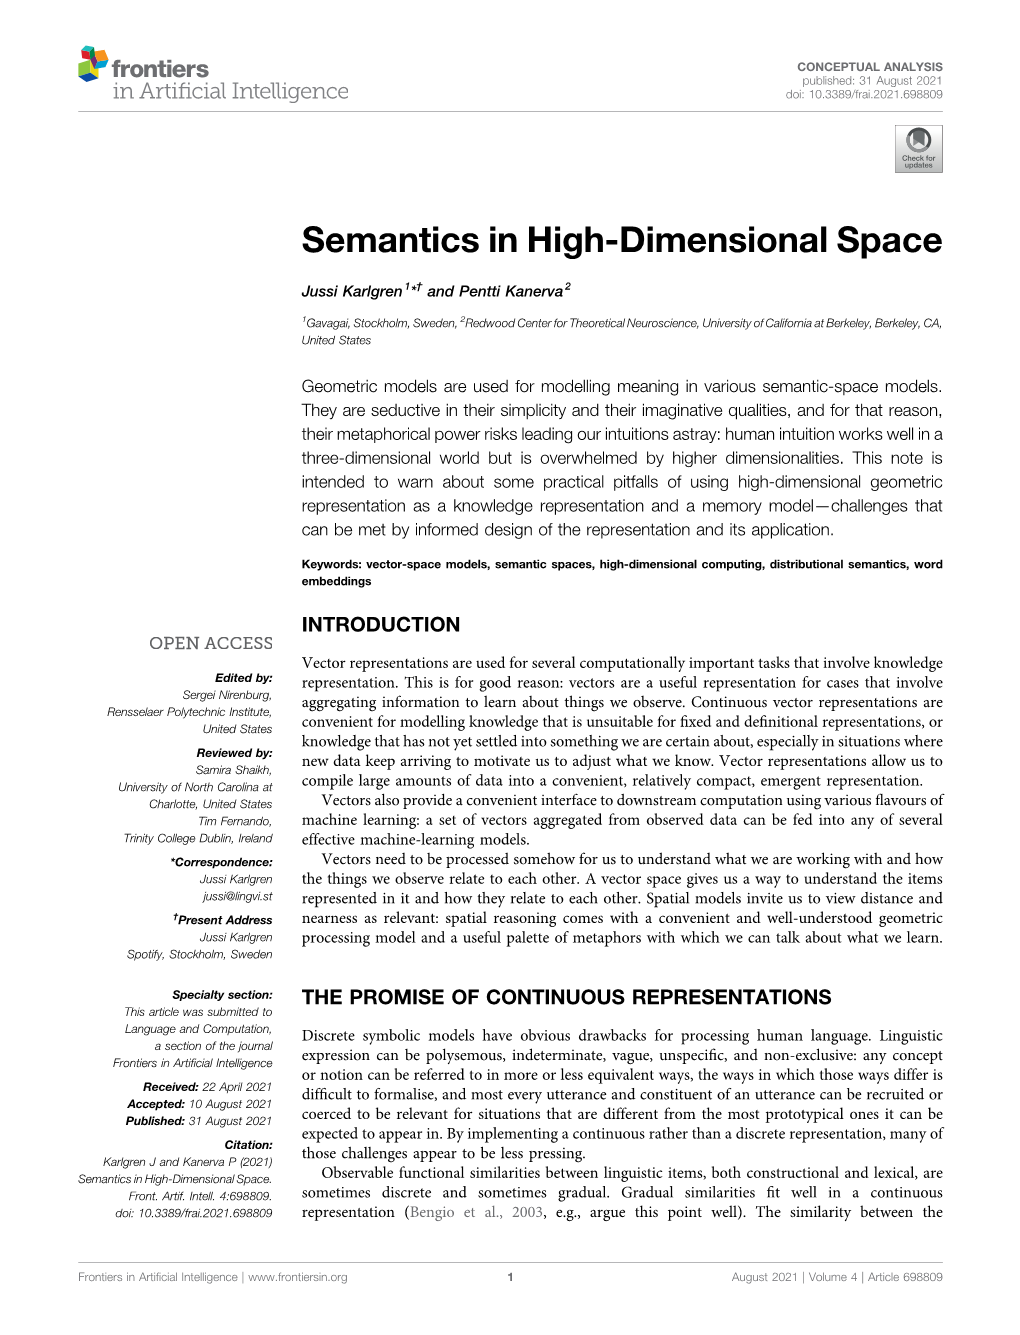 Semantics in High-Dimensional Space